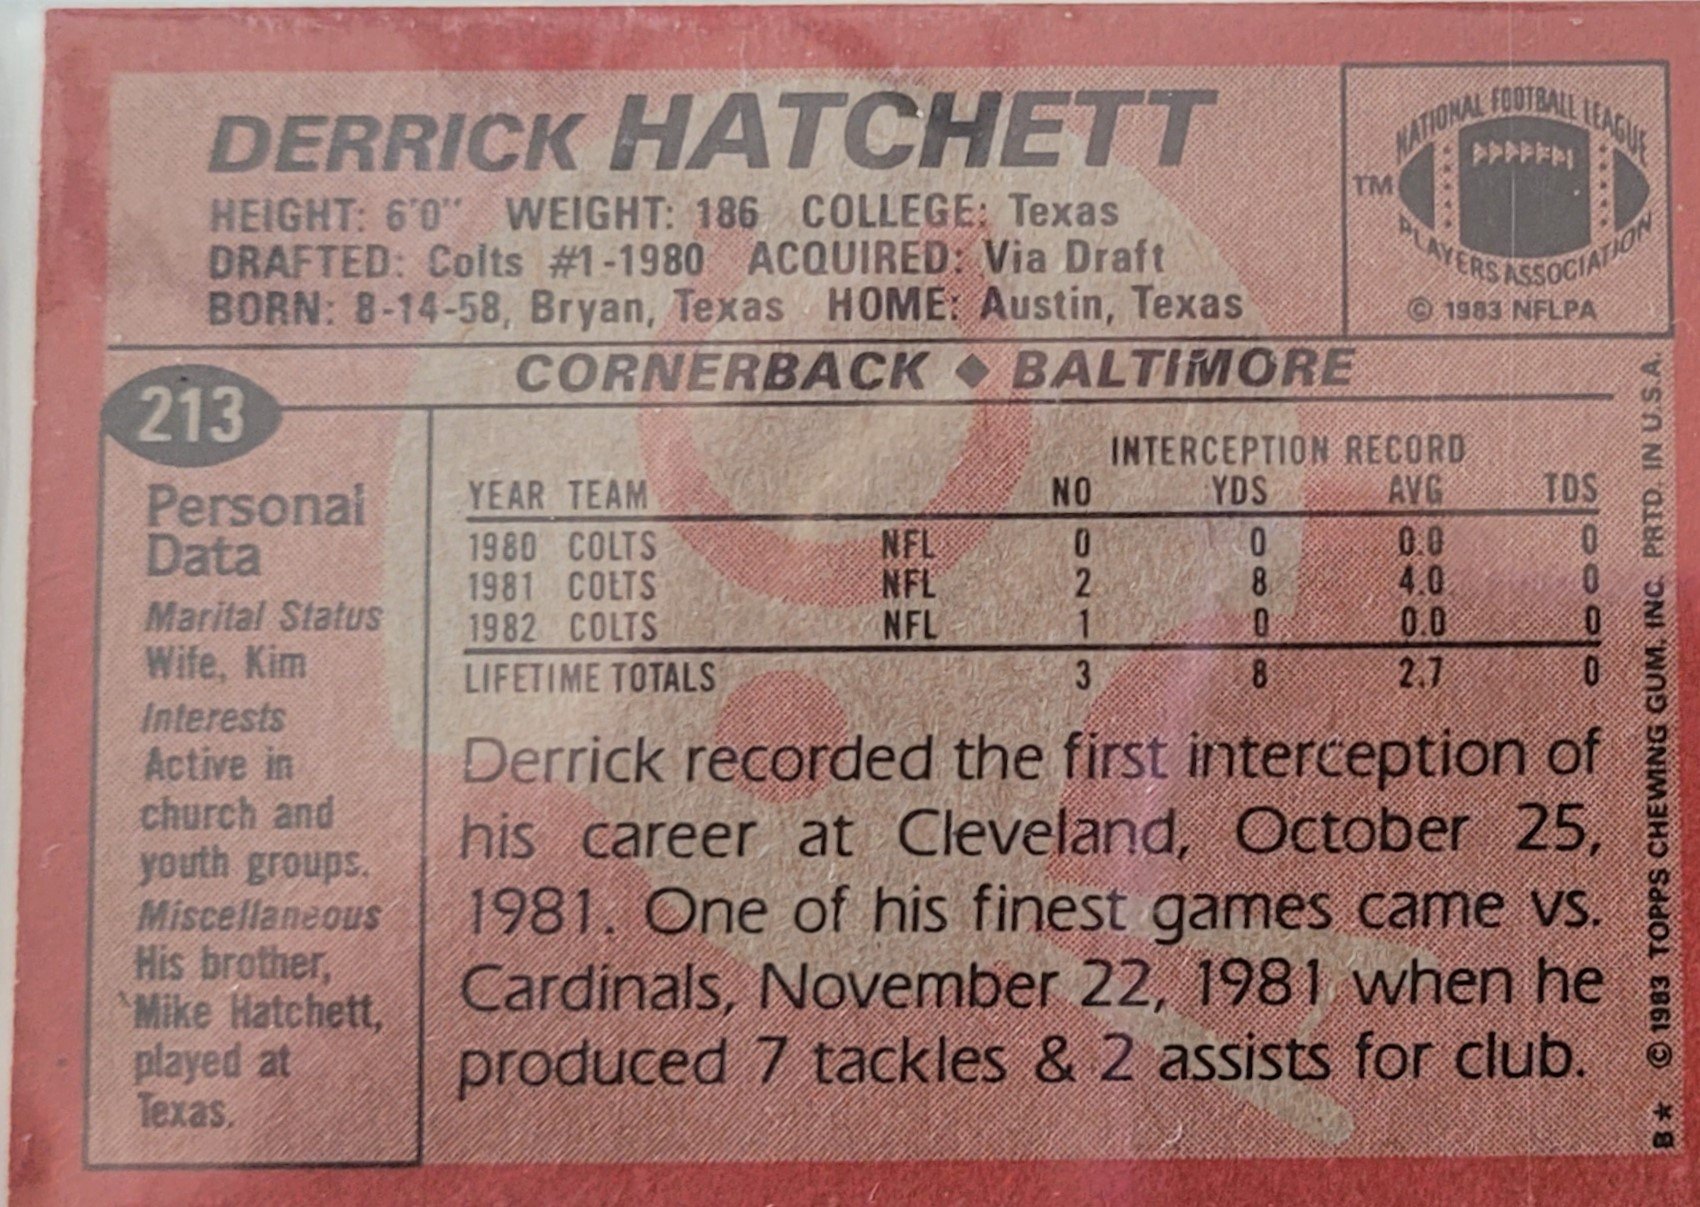 1979 Derrick Hatchett.jpg